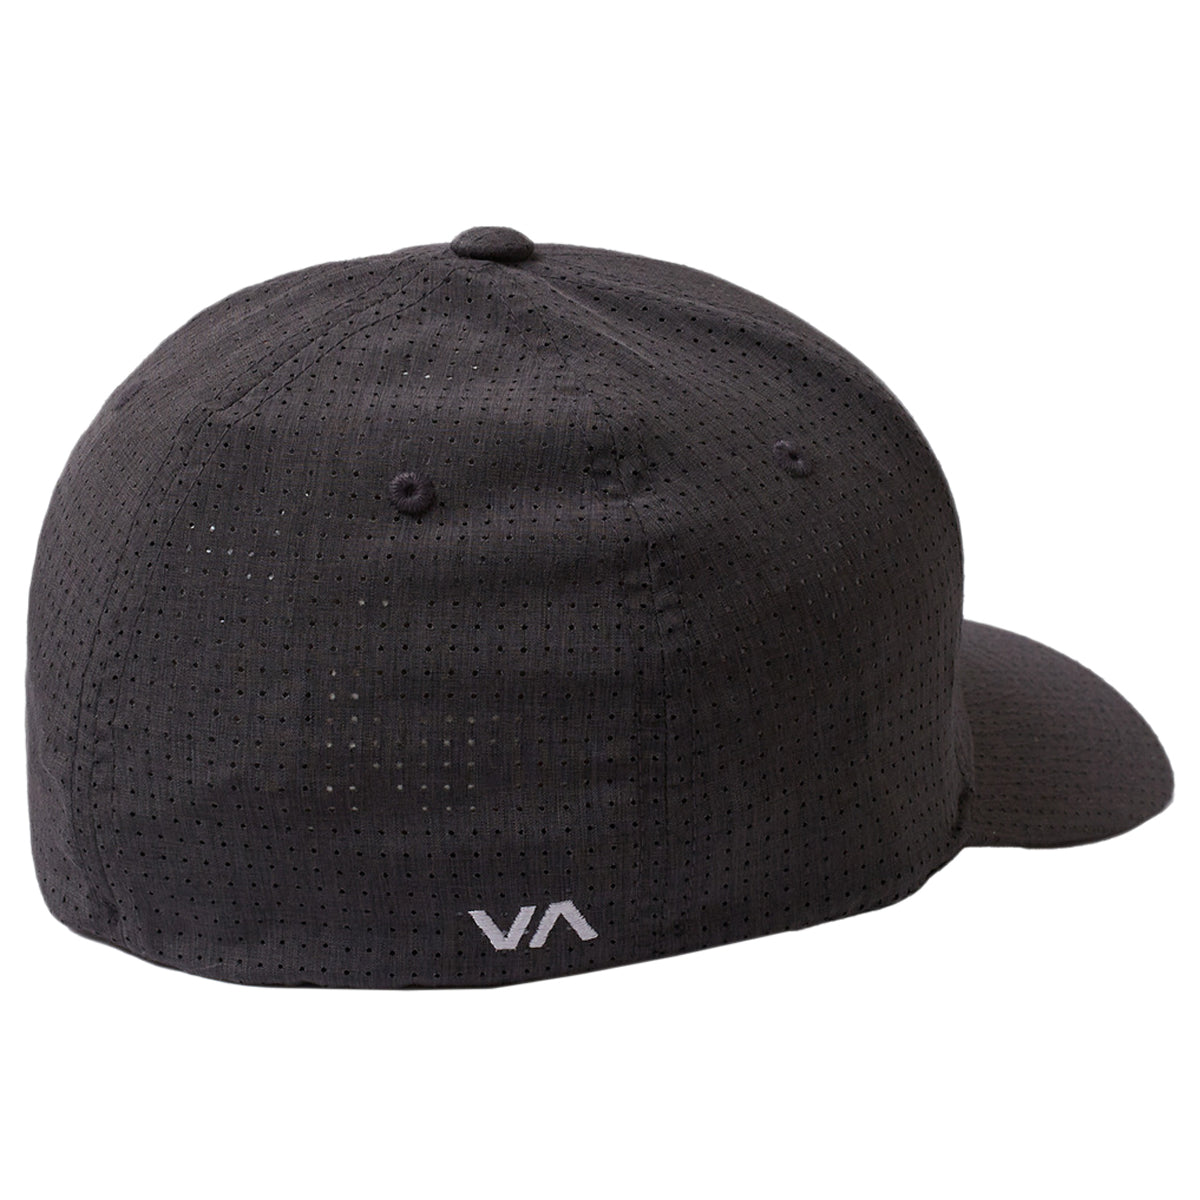 RVCA Shane Flexfit Hat - Charcoal image 2